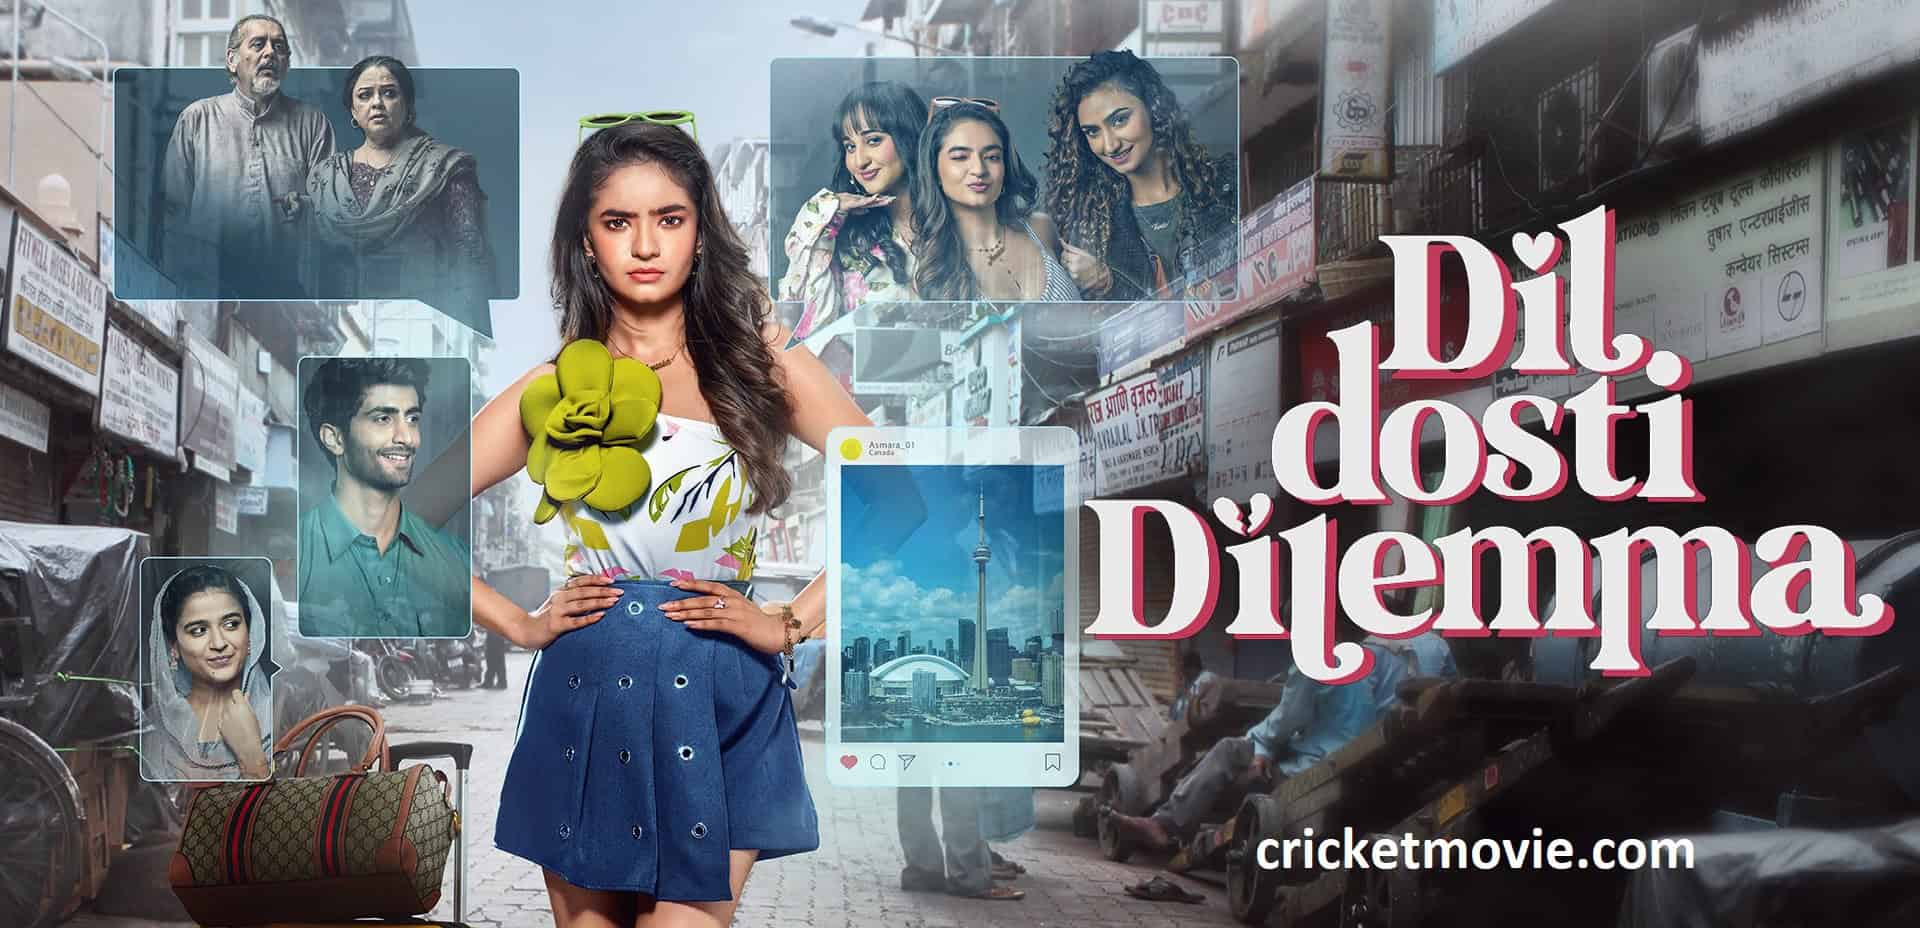 Dil Dosti Dilemma Review-cricketmovie.com